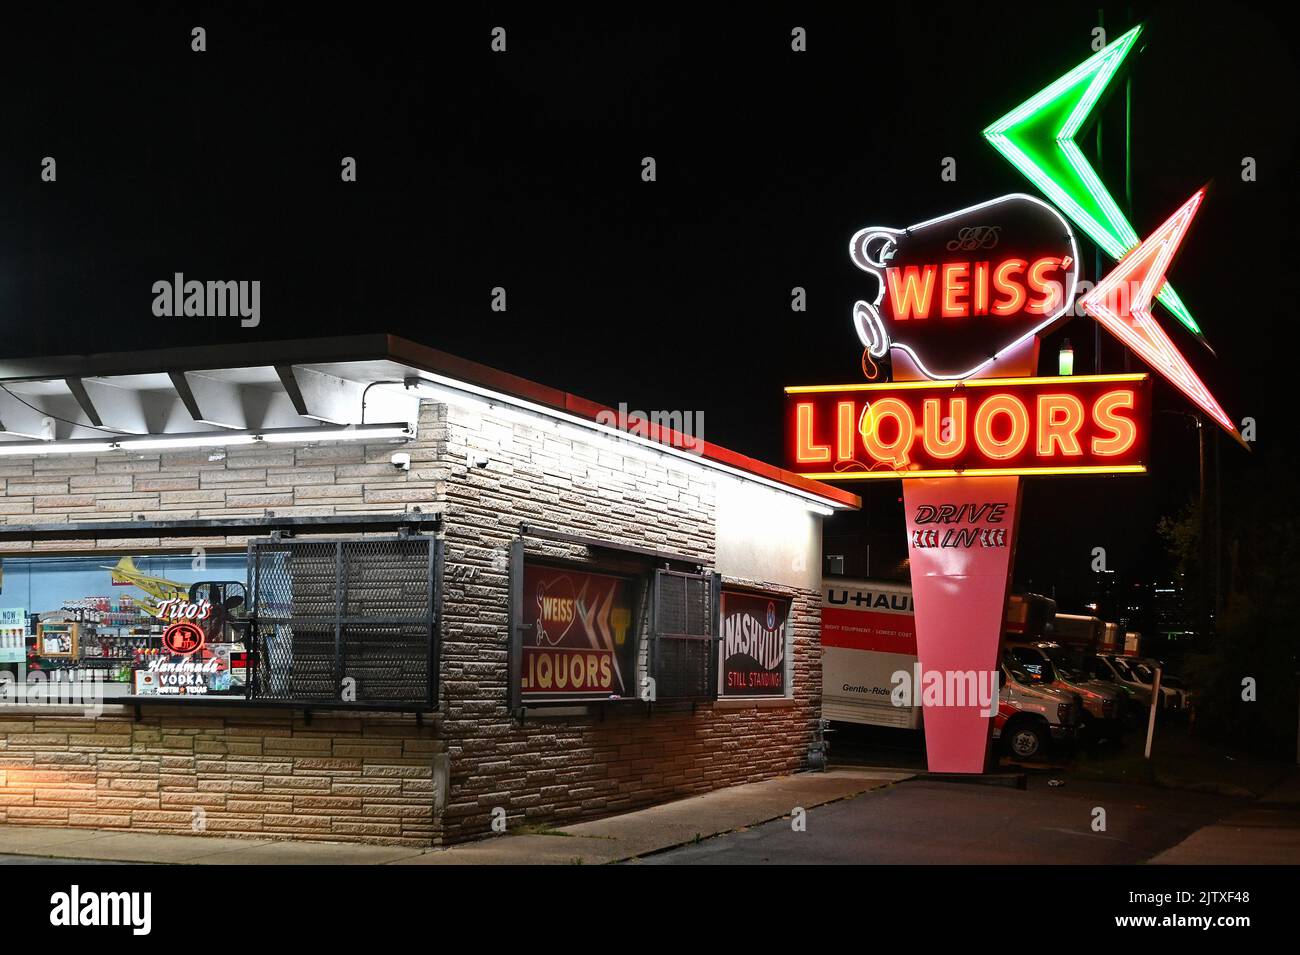 Illuminated sign Weiss Liquors in East Nashville ; Nashville, Tennessee, United States of America Stock Photo